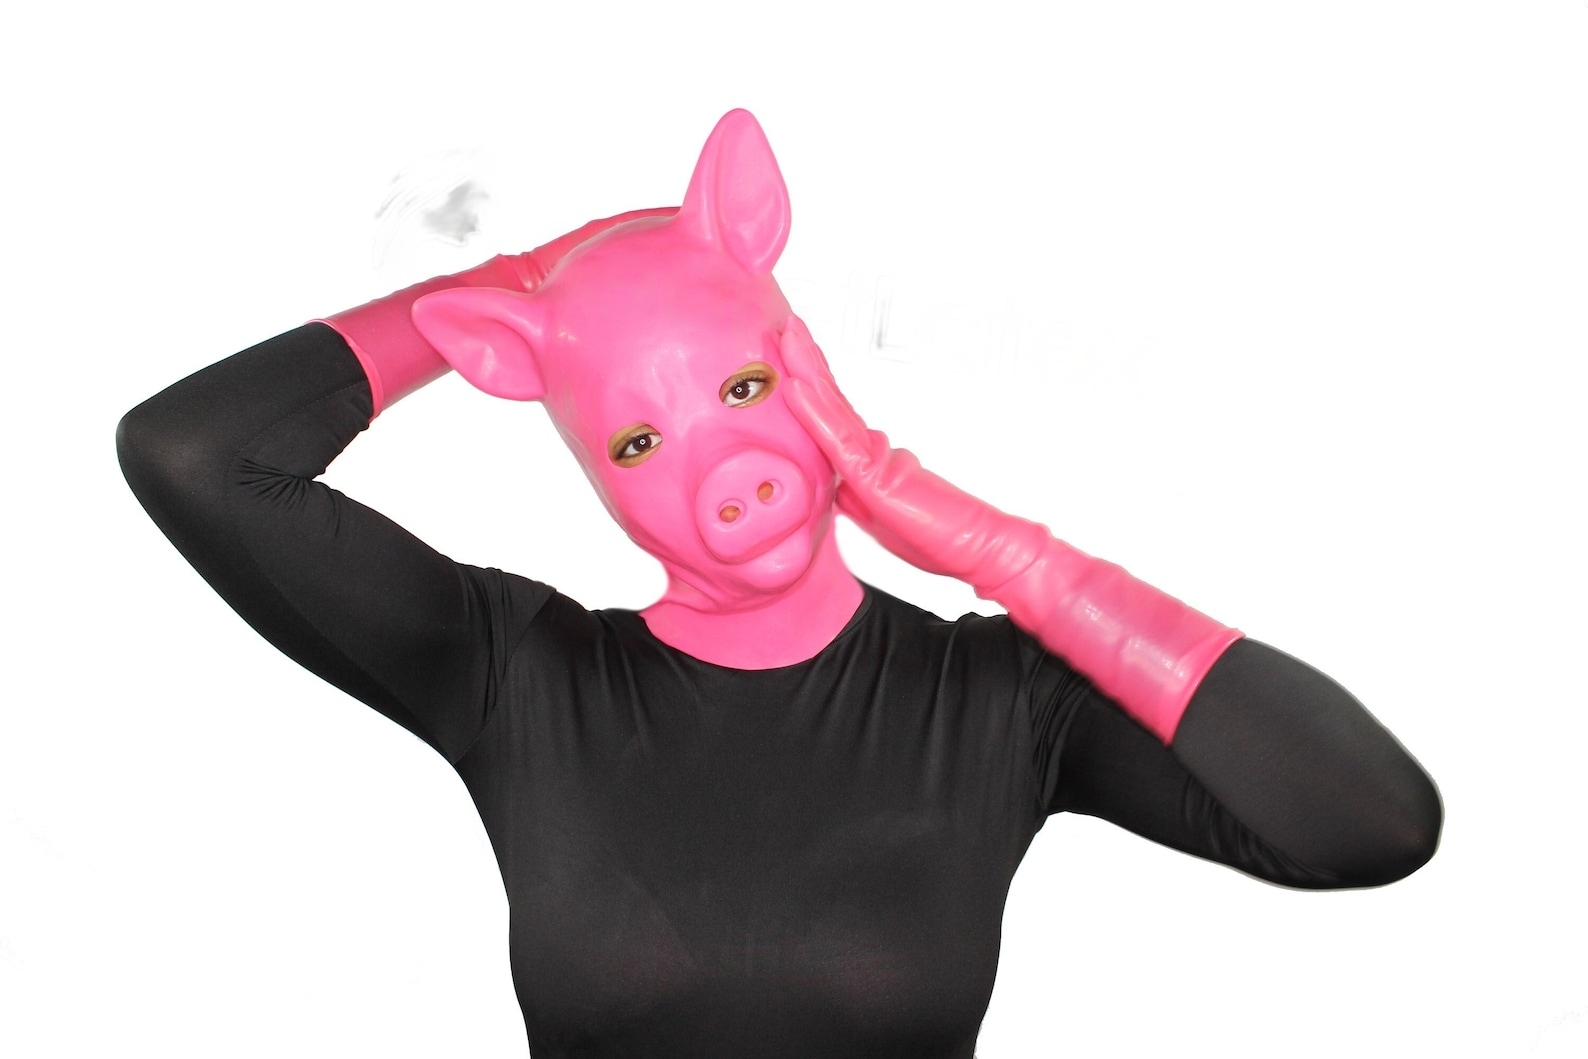 Dressed female in a pink pig fetish mask